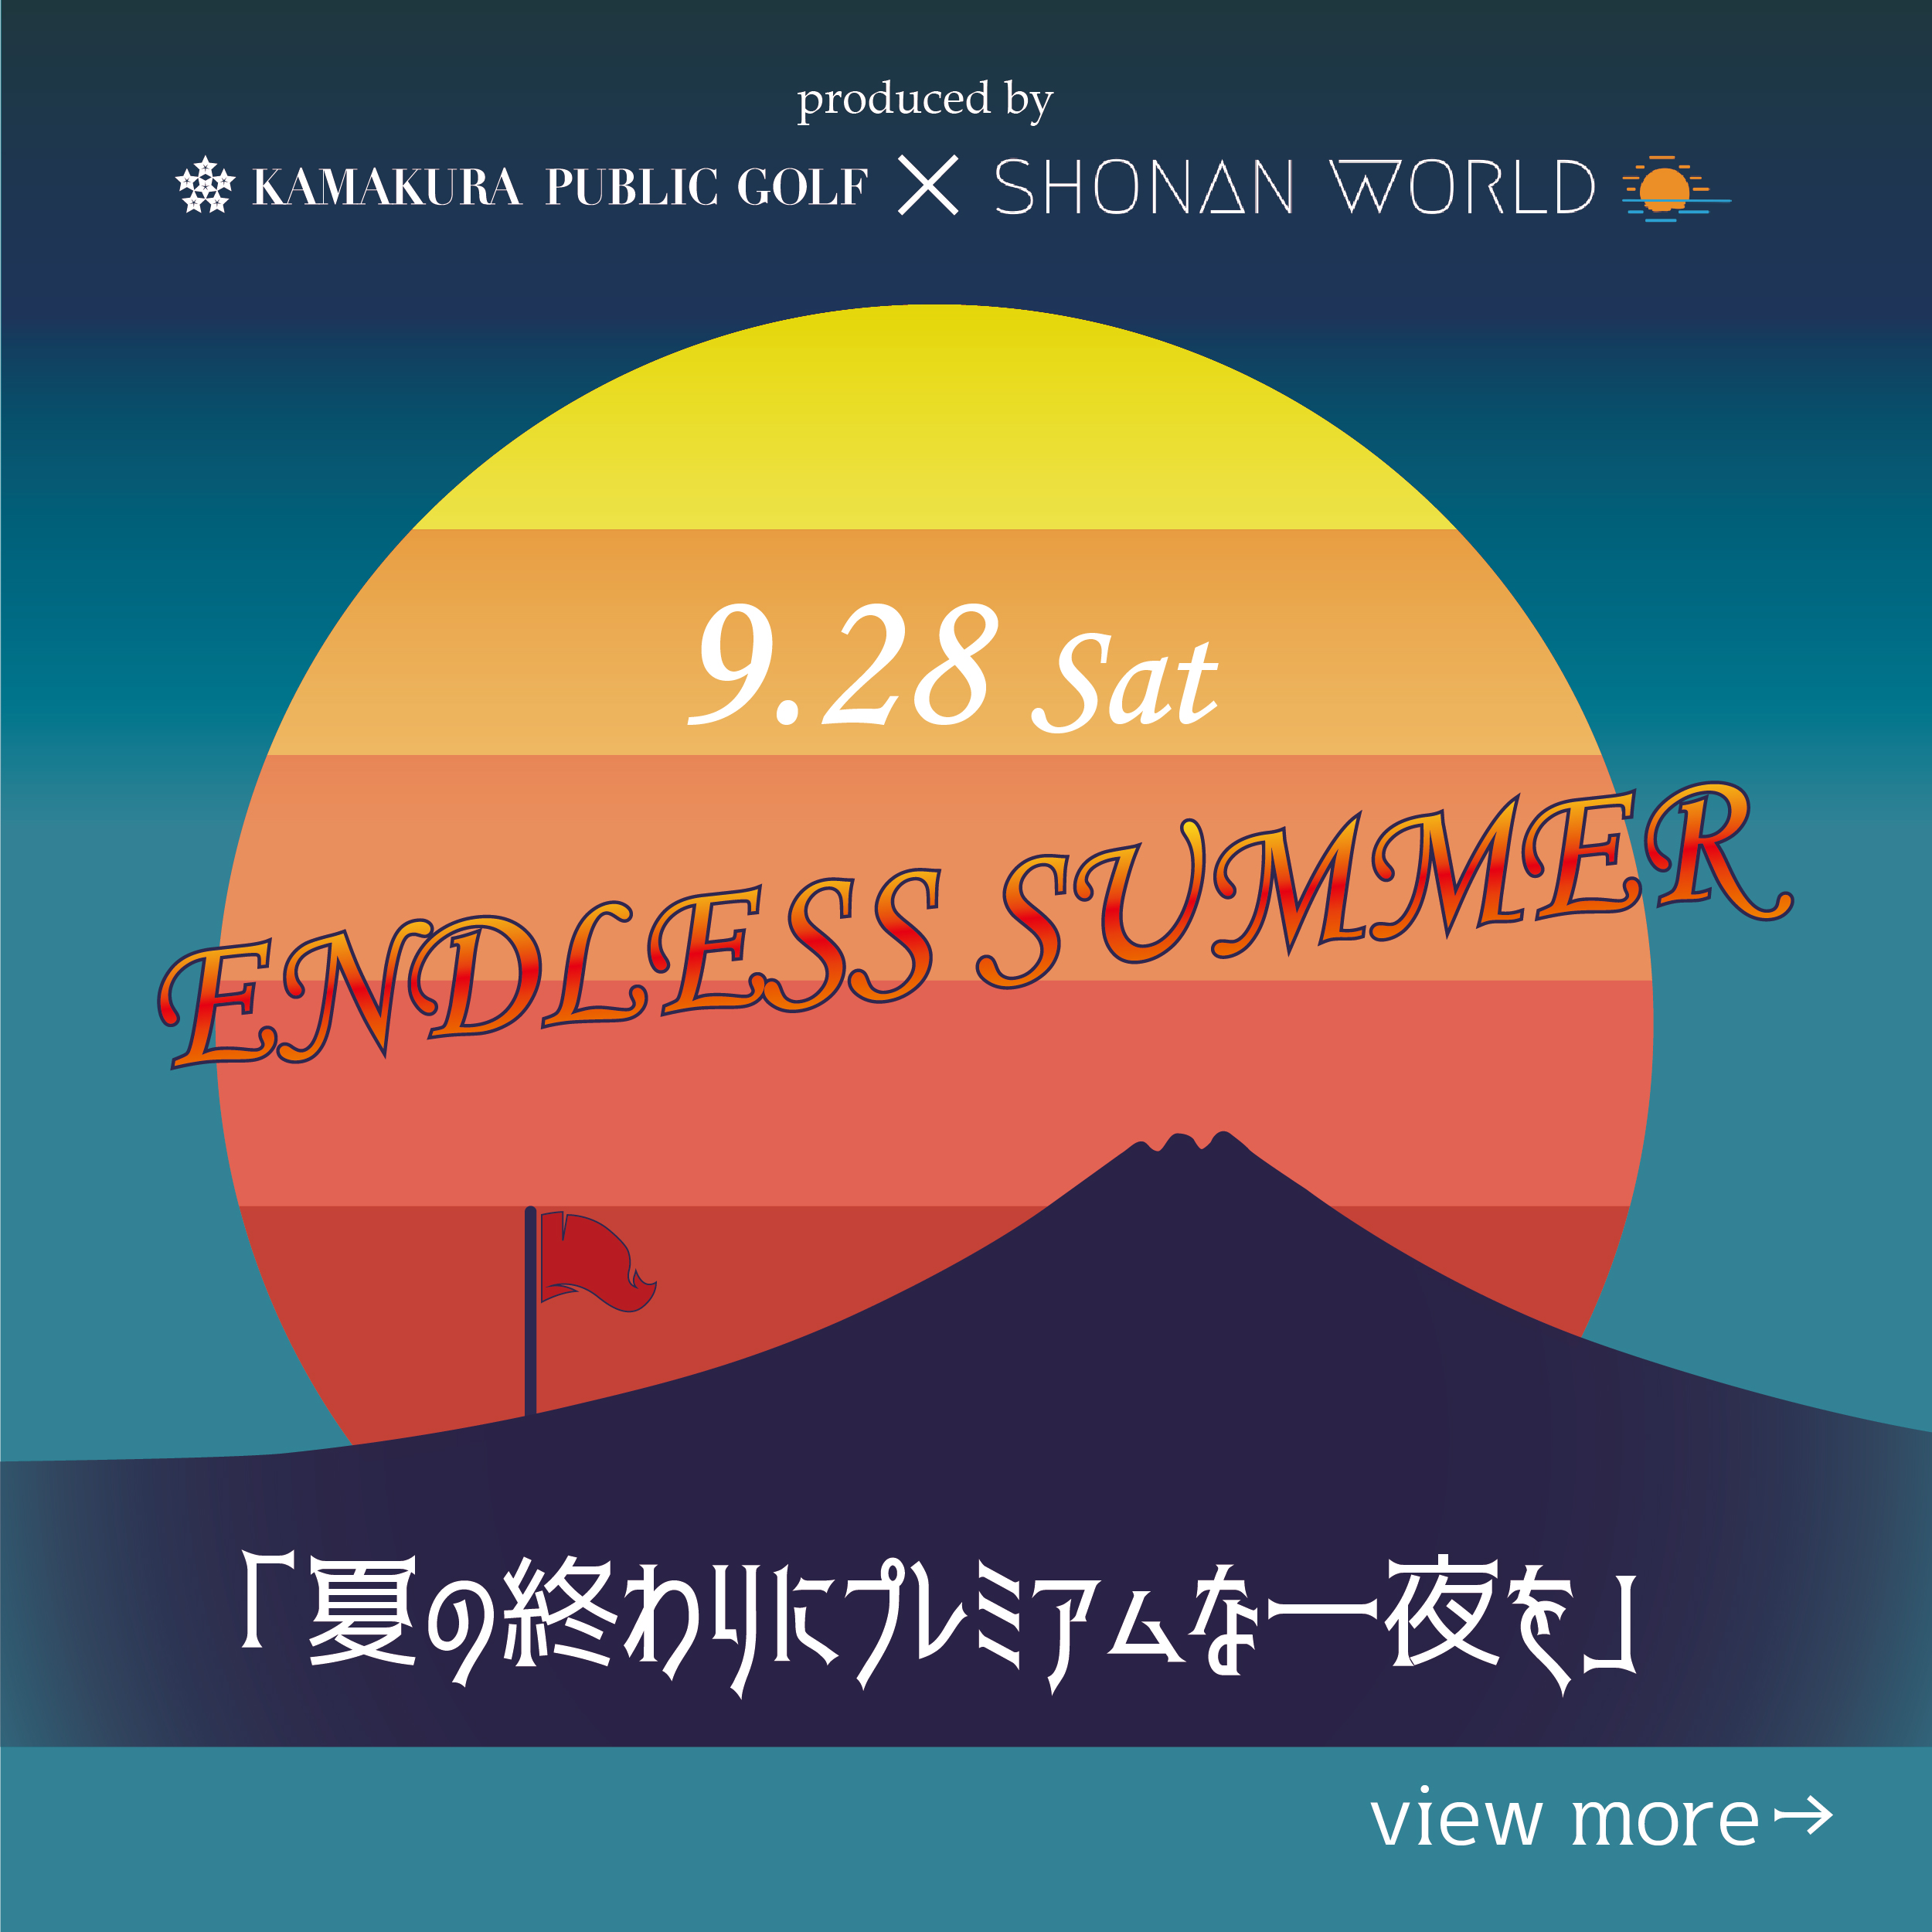 ENDLESS SUMMER produced by 鎌パブ×SHONAN WORLD | 鎌倉パブリックゴルフ場